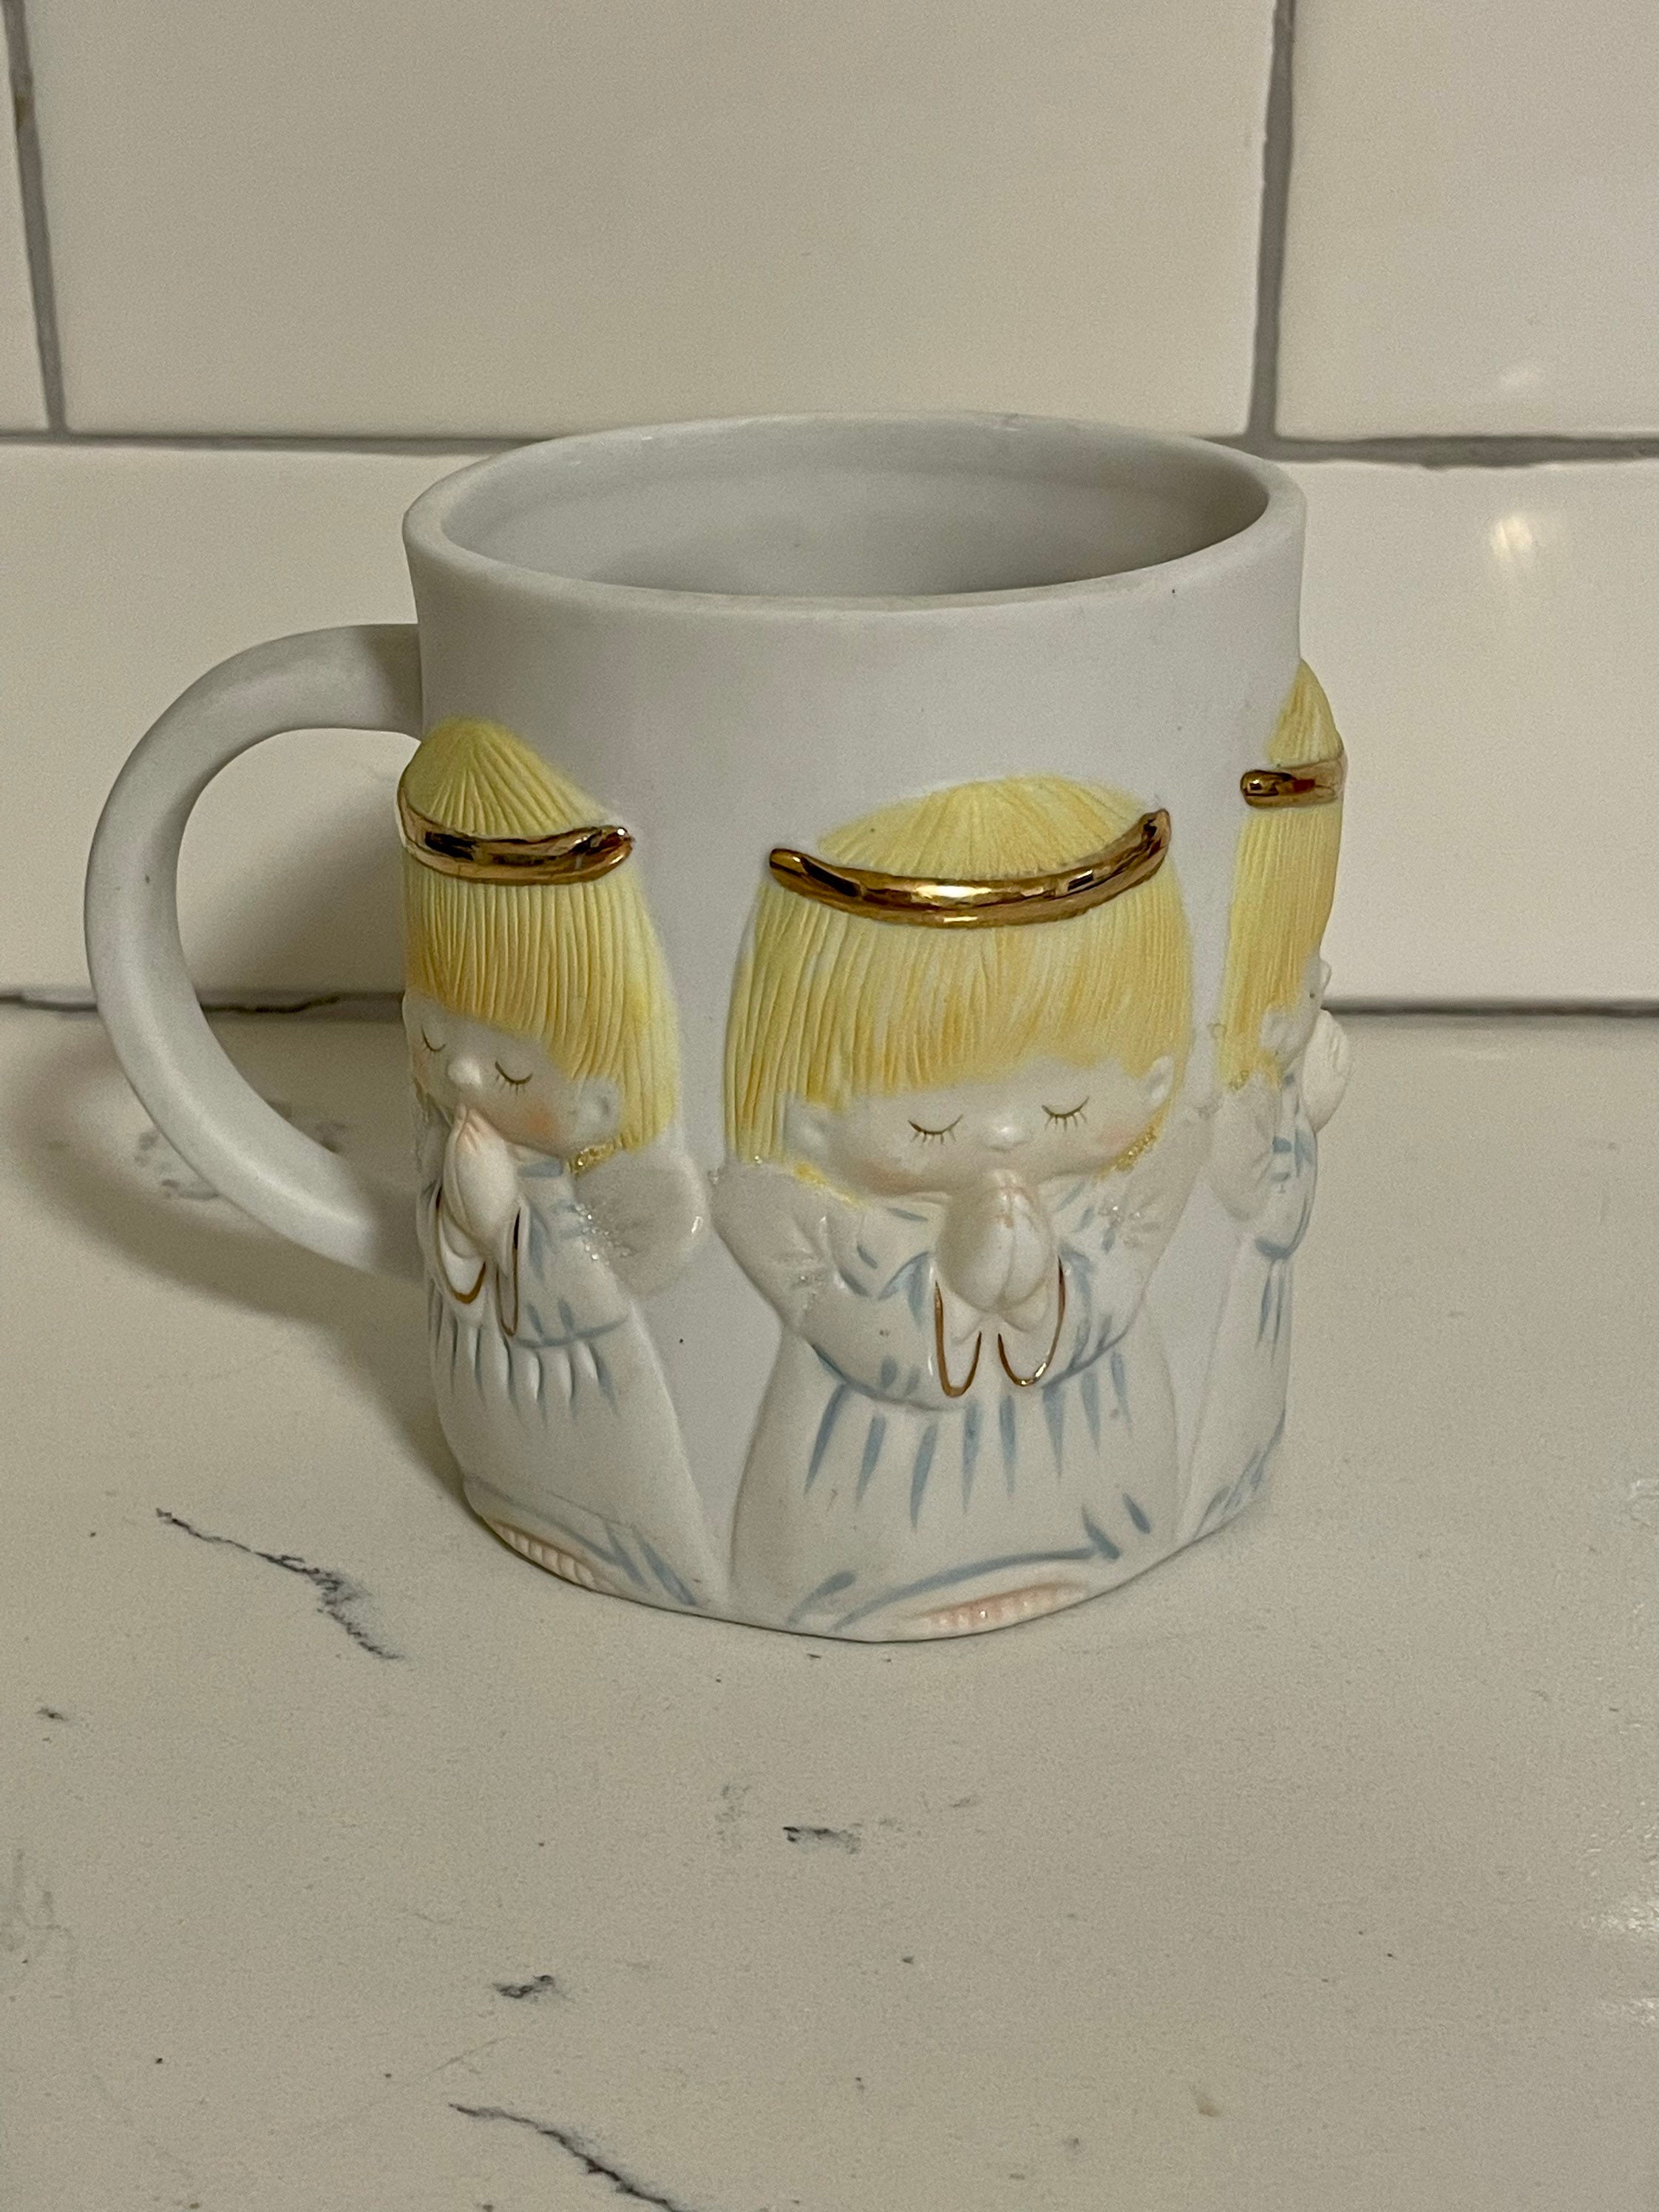 Hallmark Angels mug Peace Love joy mug coffee cup